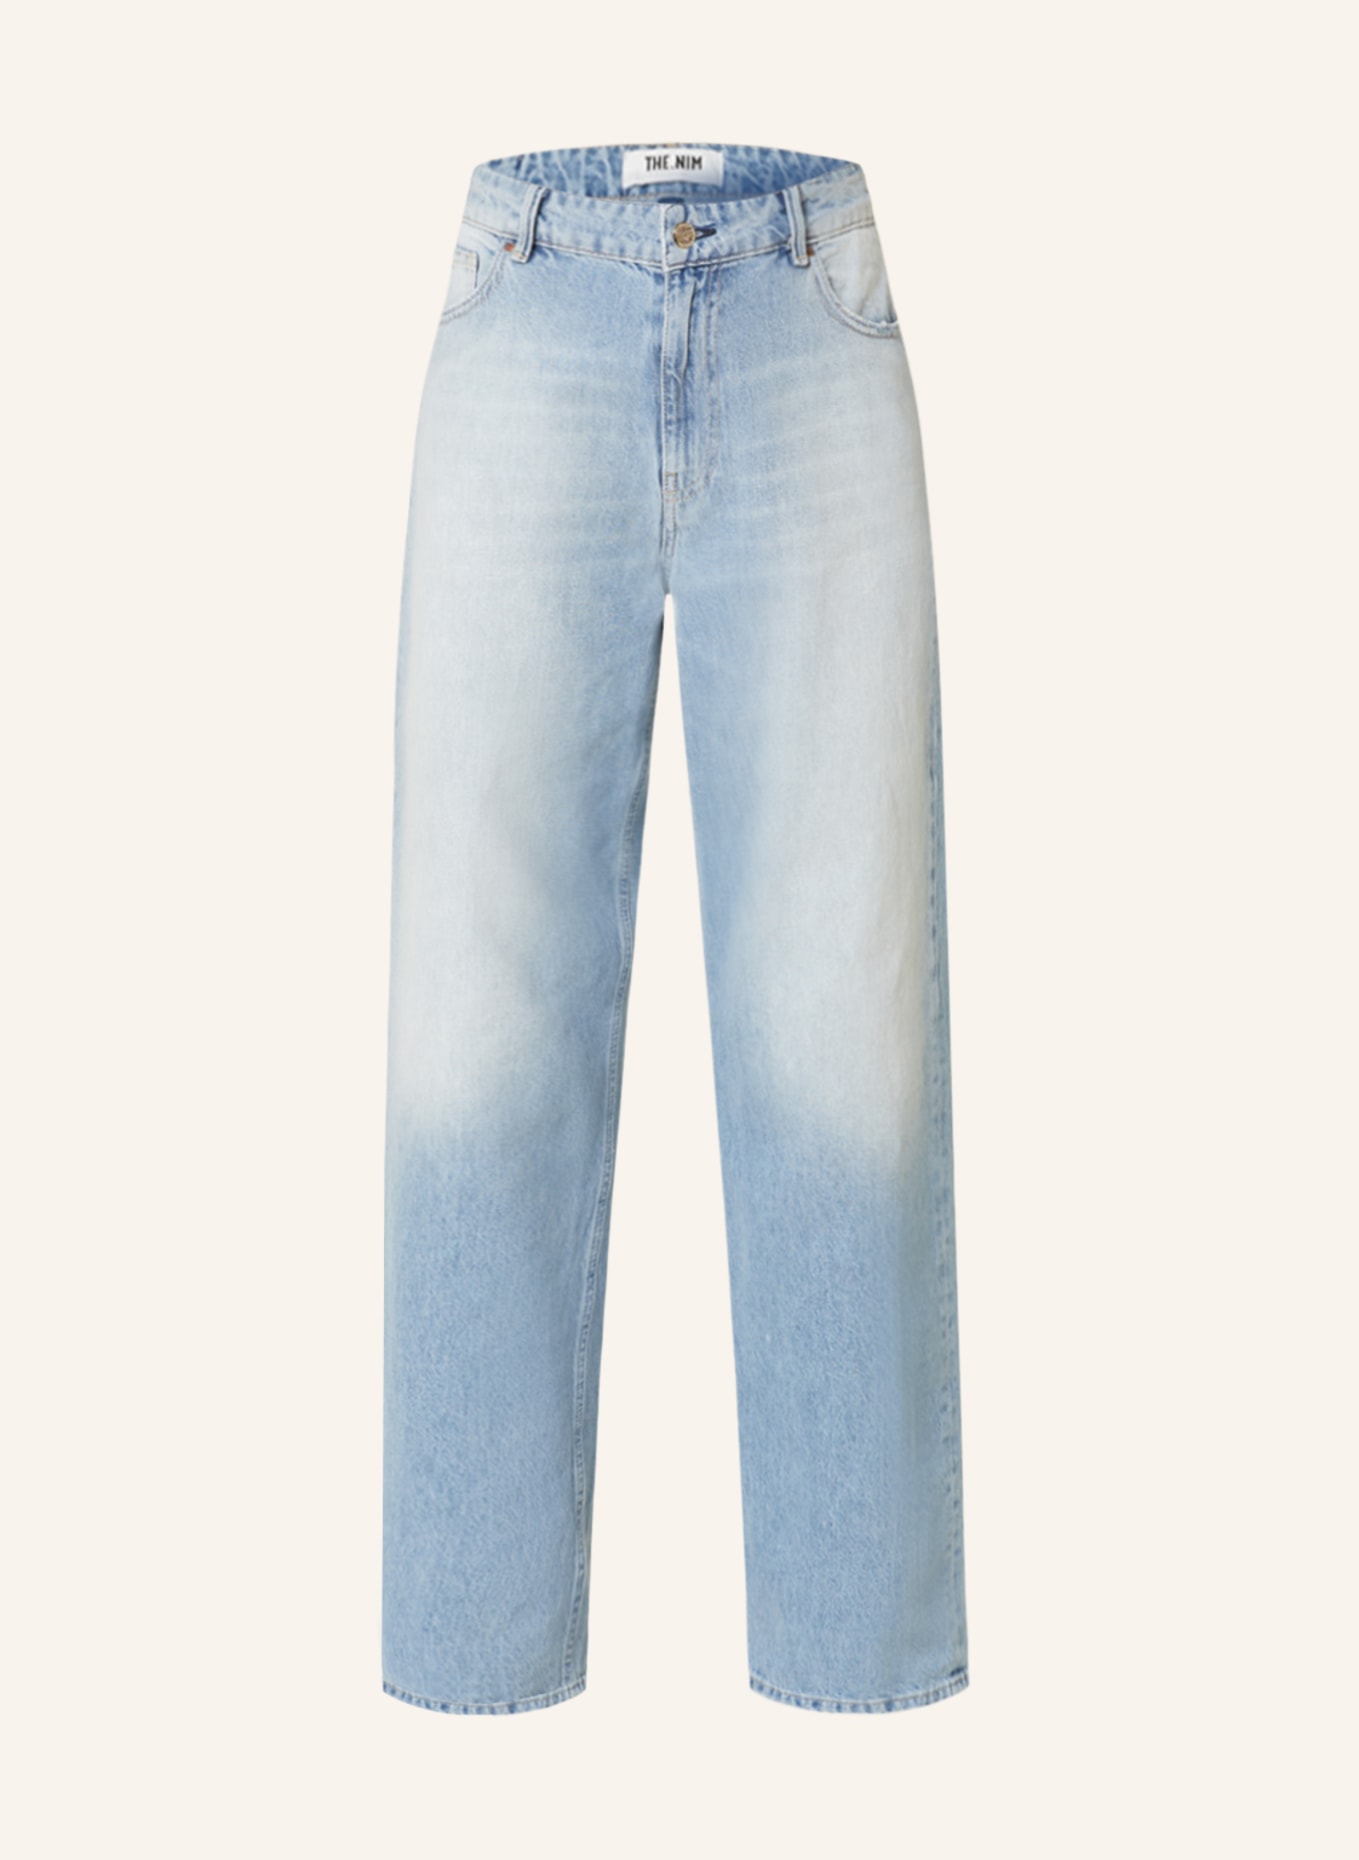 THE.NIM STANDARD Straight Jeans EMMA, Farbe: W725-LSW LIGHT STONE WASHED (Bild 1)